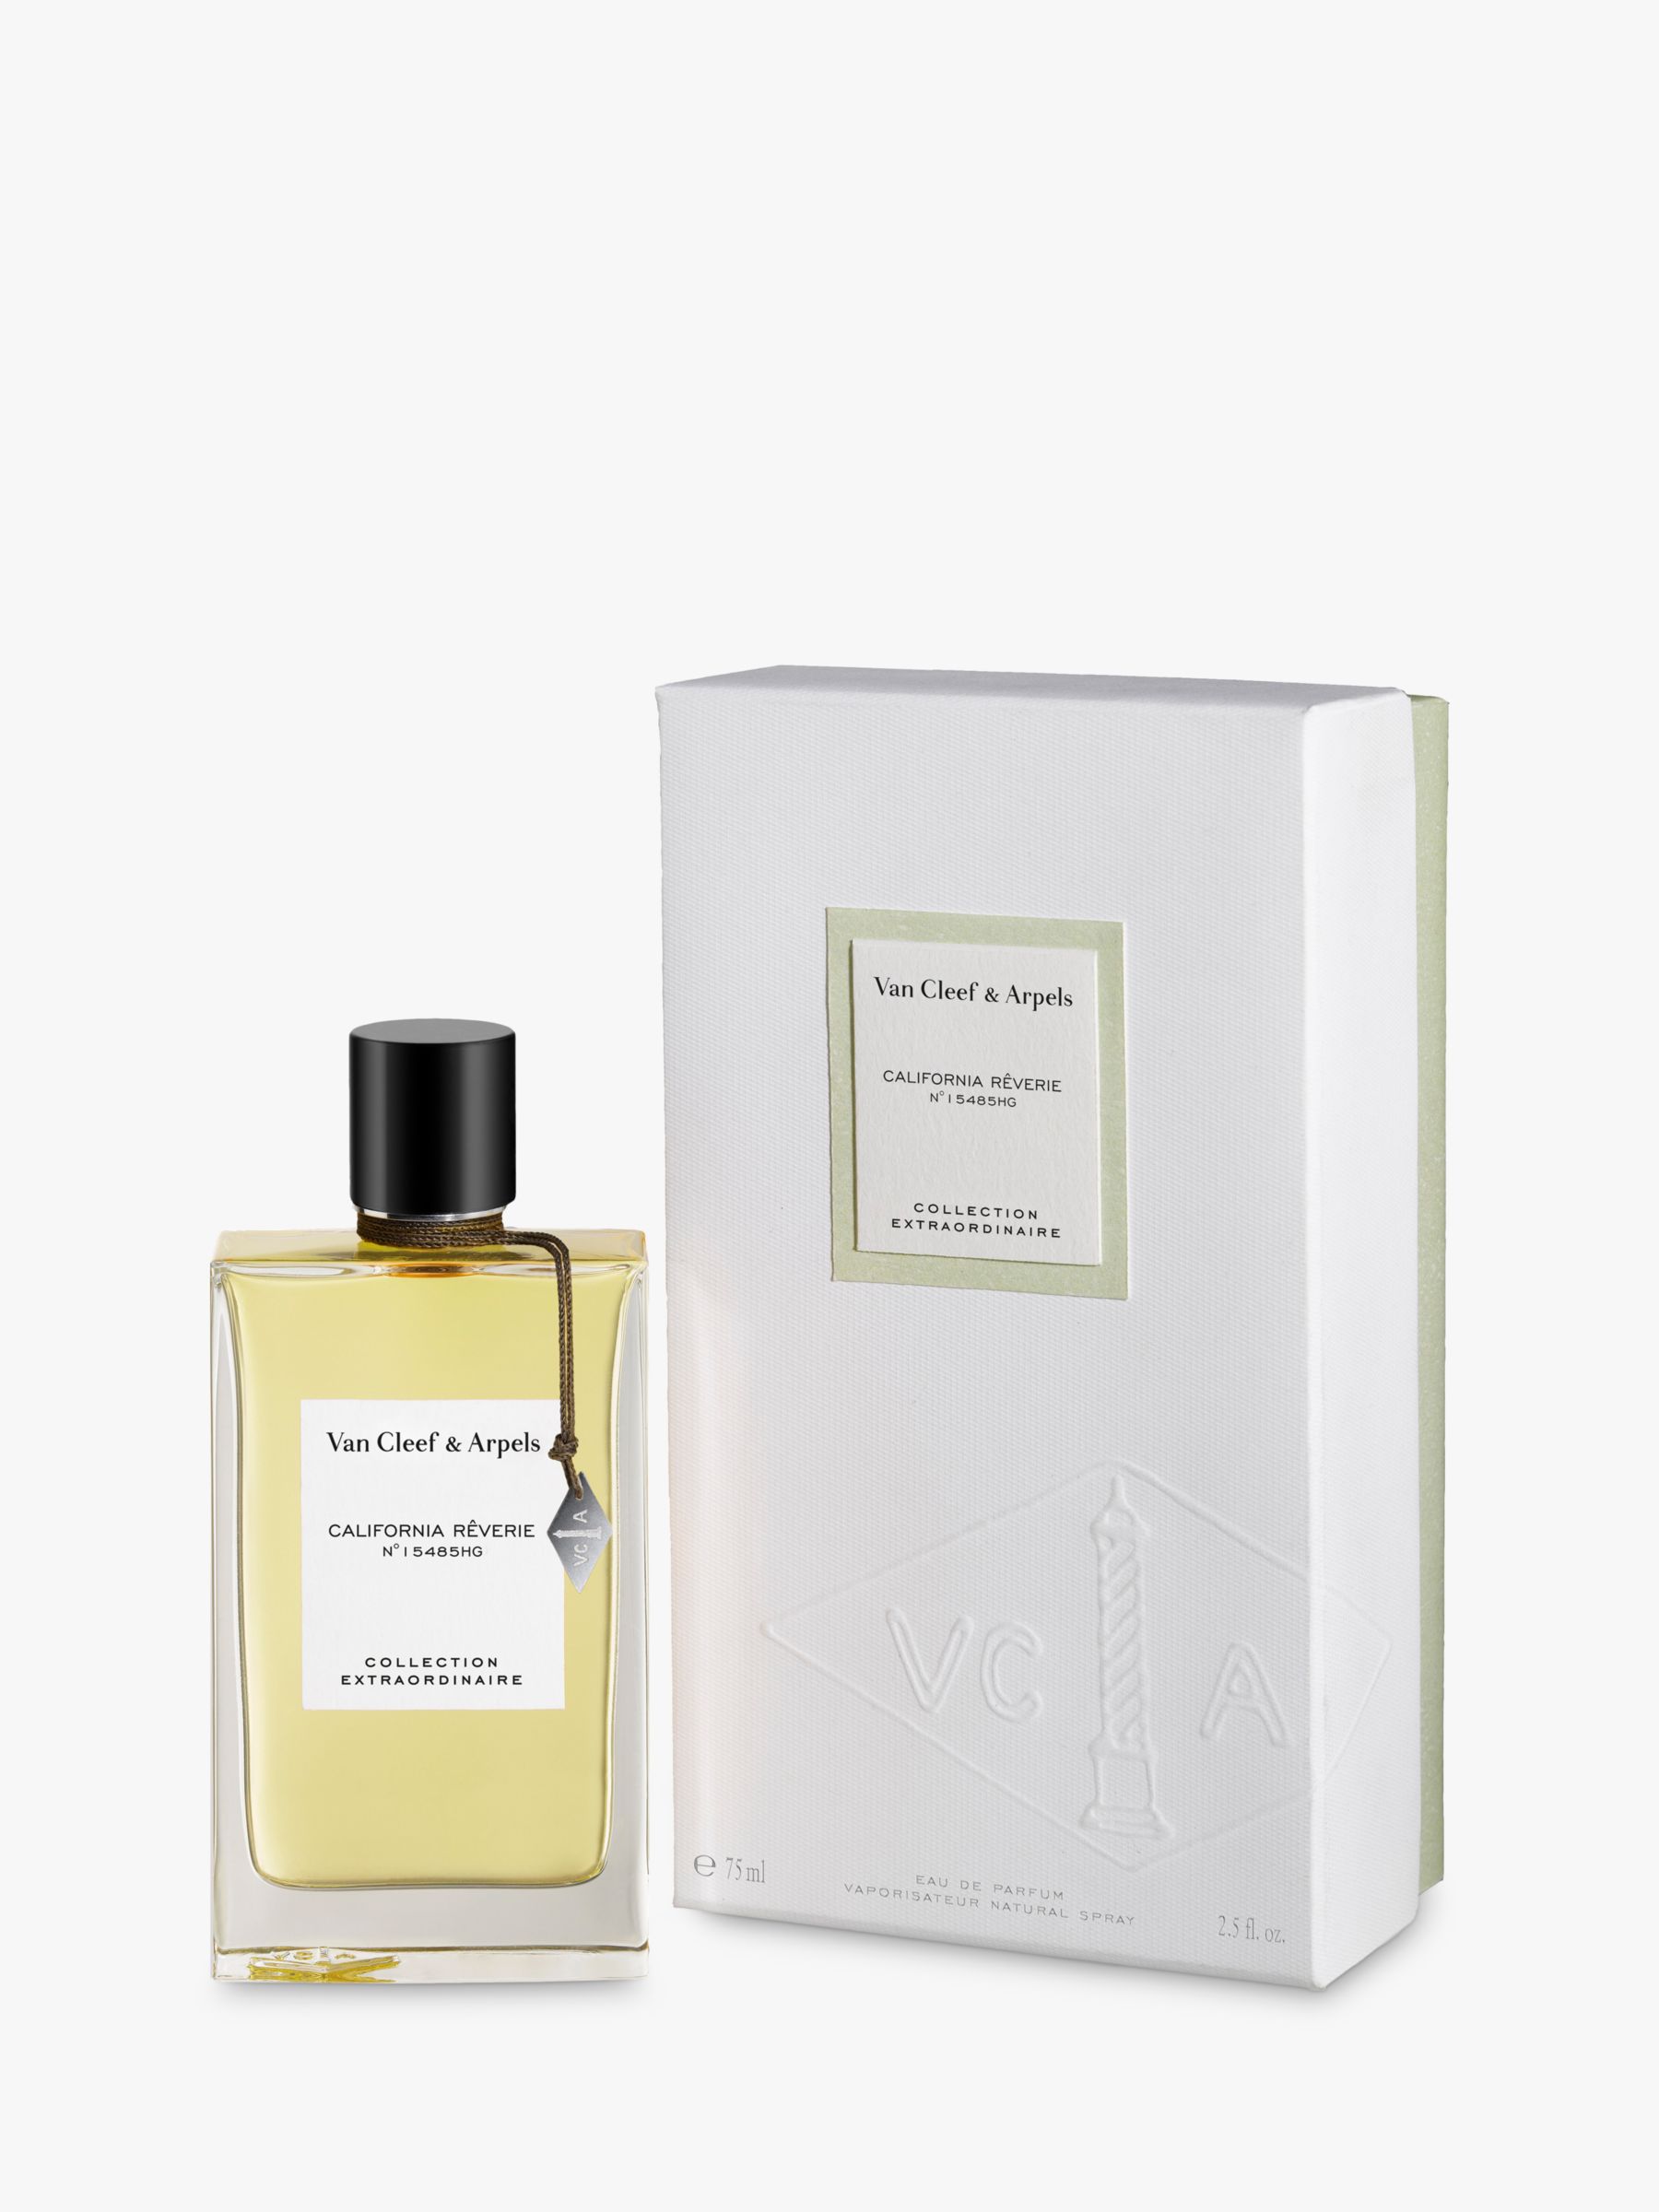 Van Cleef & Arpels Collection Extraordinaire California Rêverie Eau de Parfum, 75ml 6